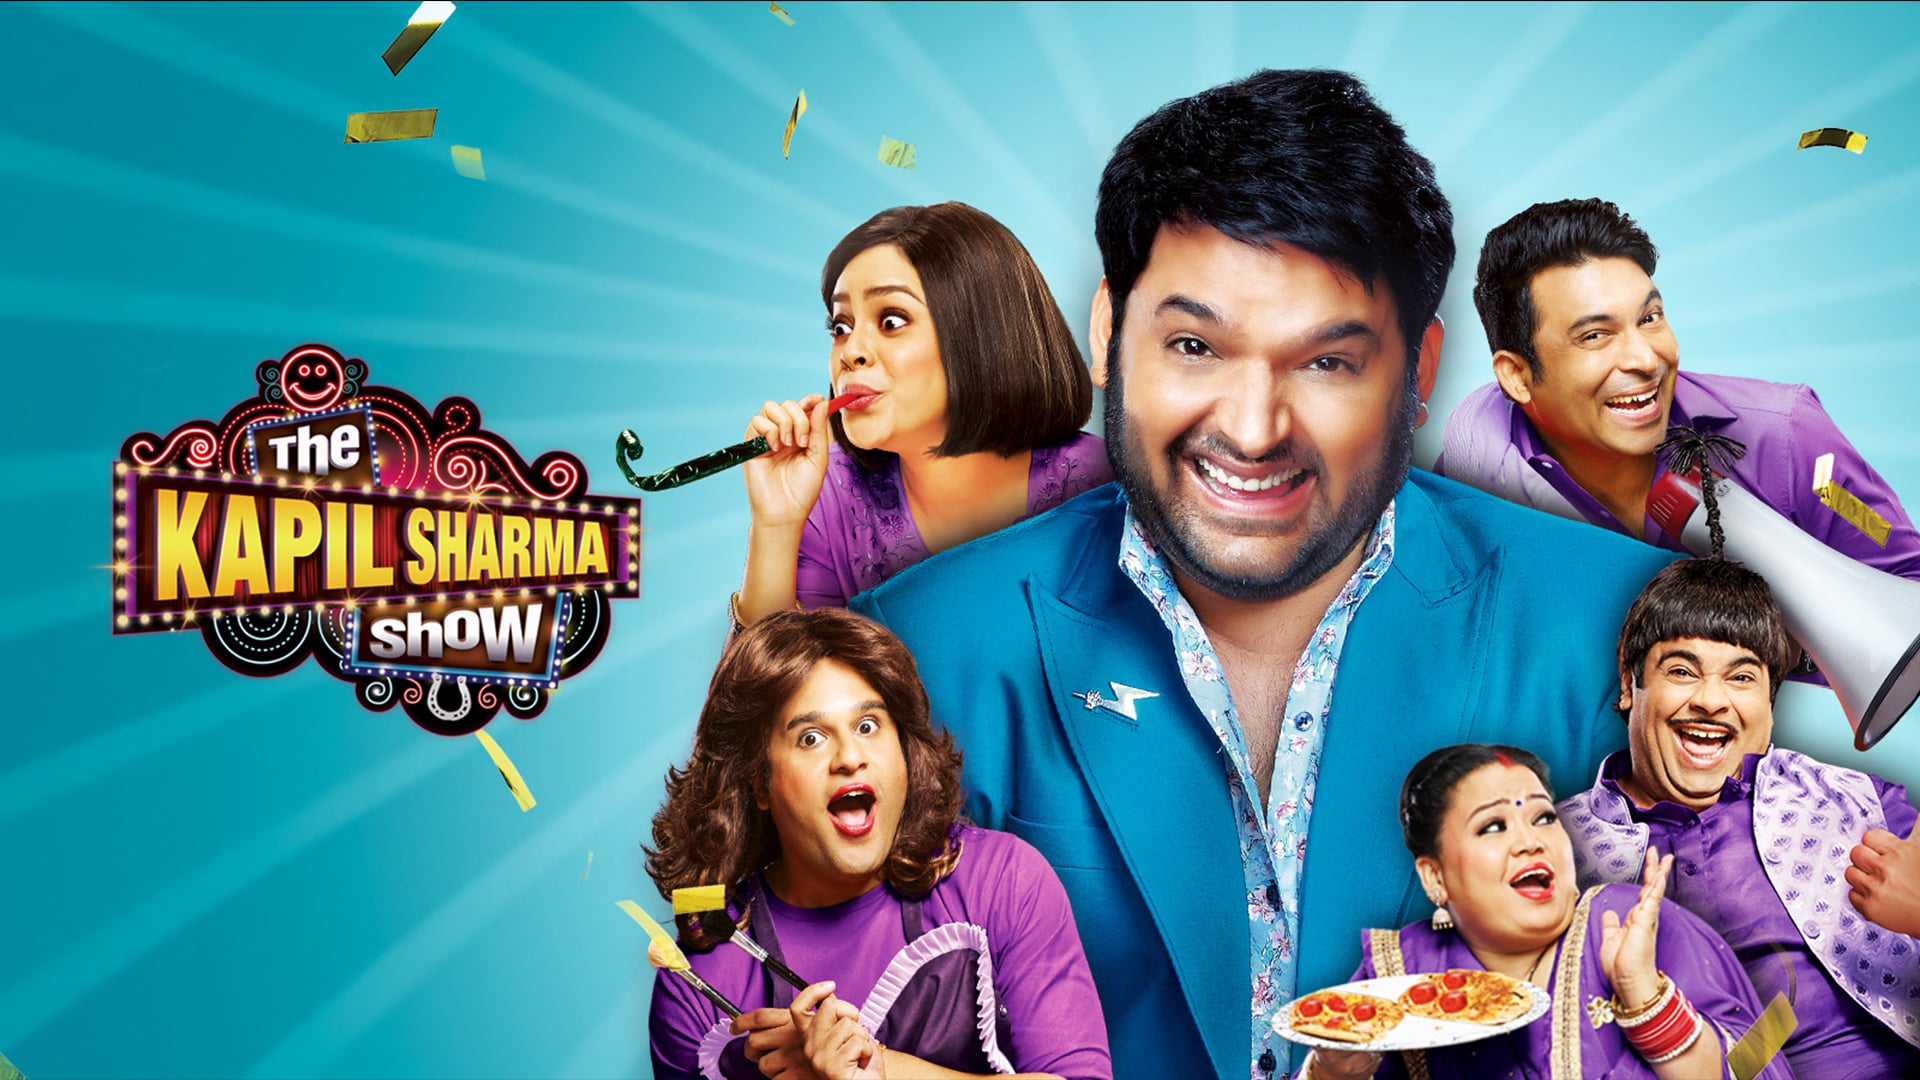 The Kapil Sharma Show - Season 2 Episode 243 : Friendship Special